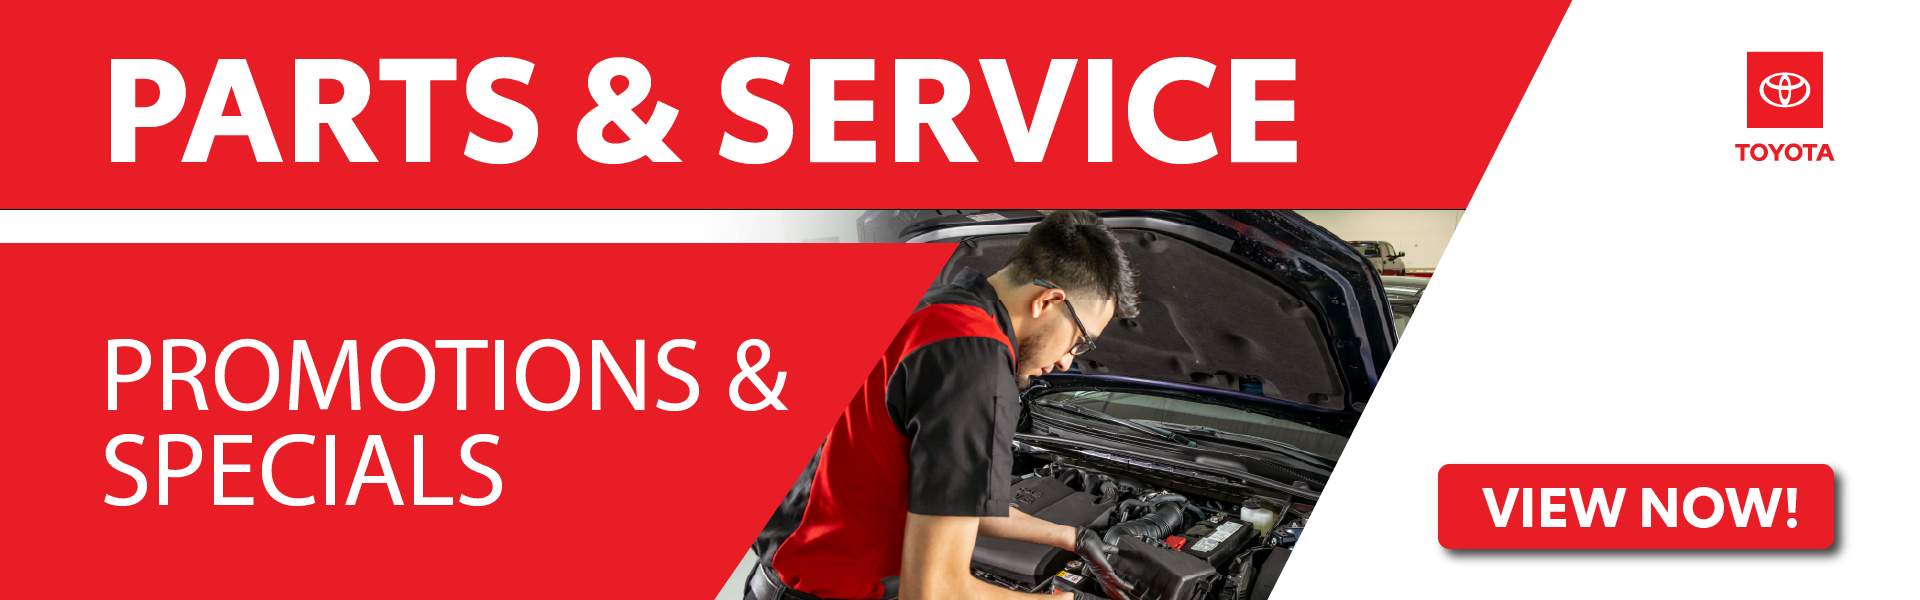 Parts and service specials